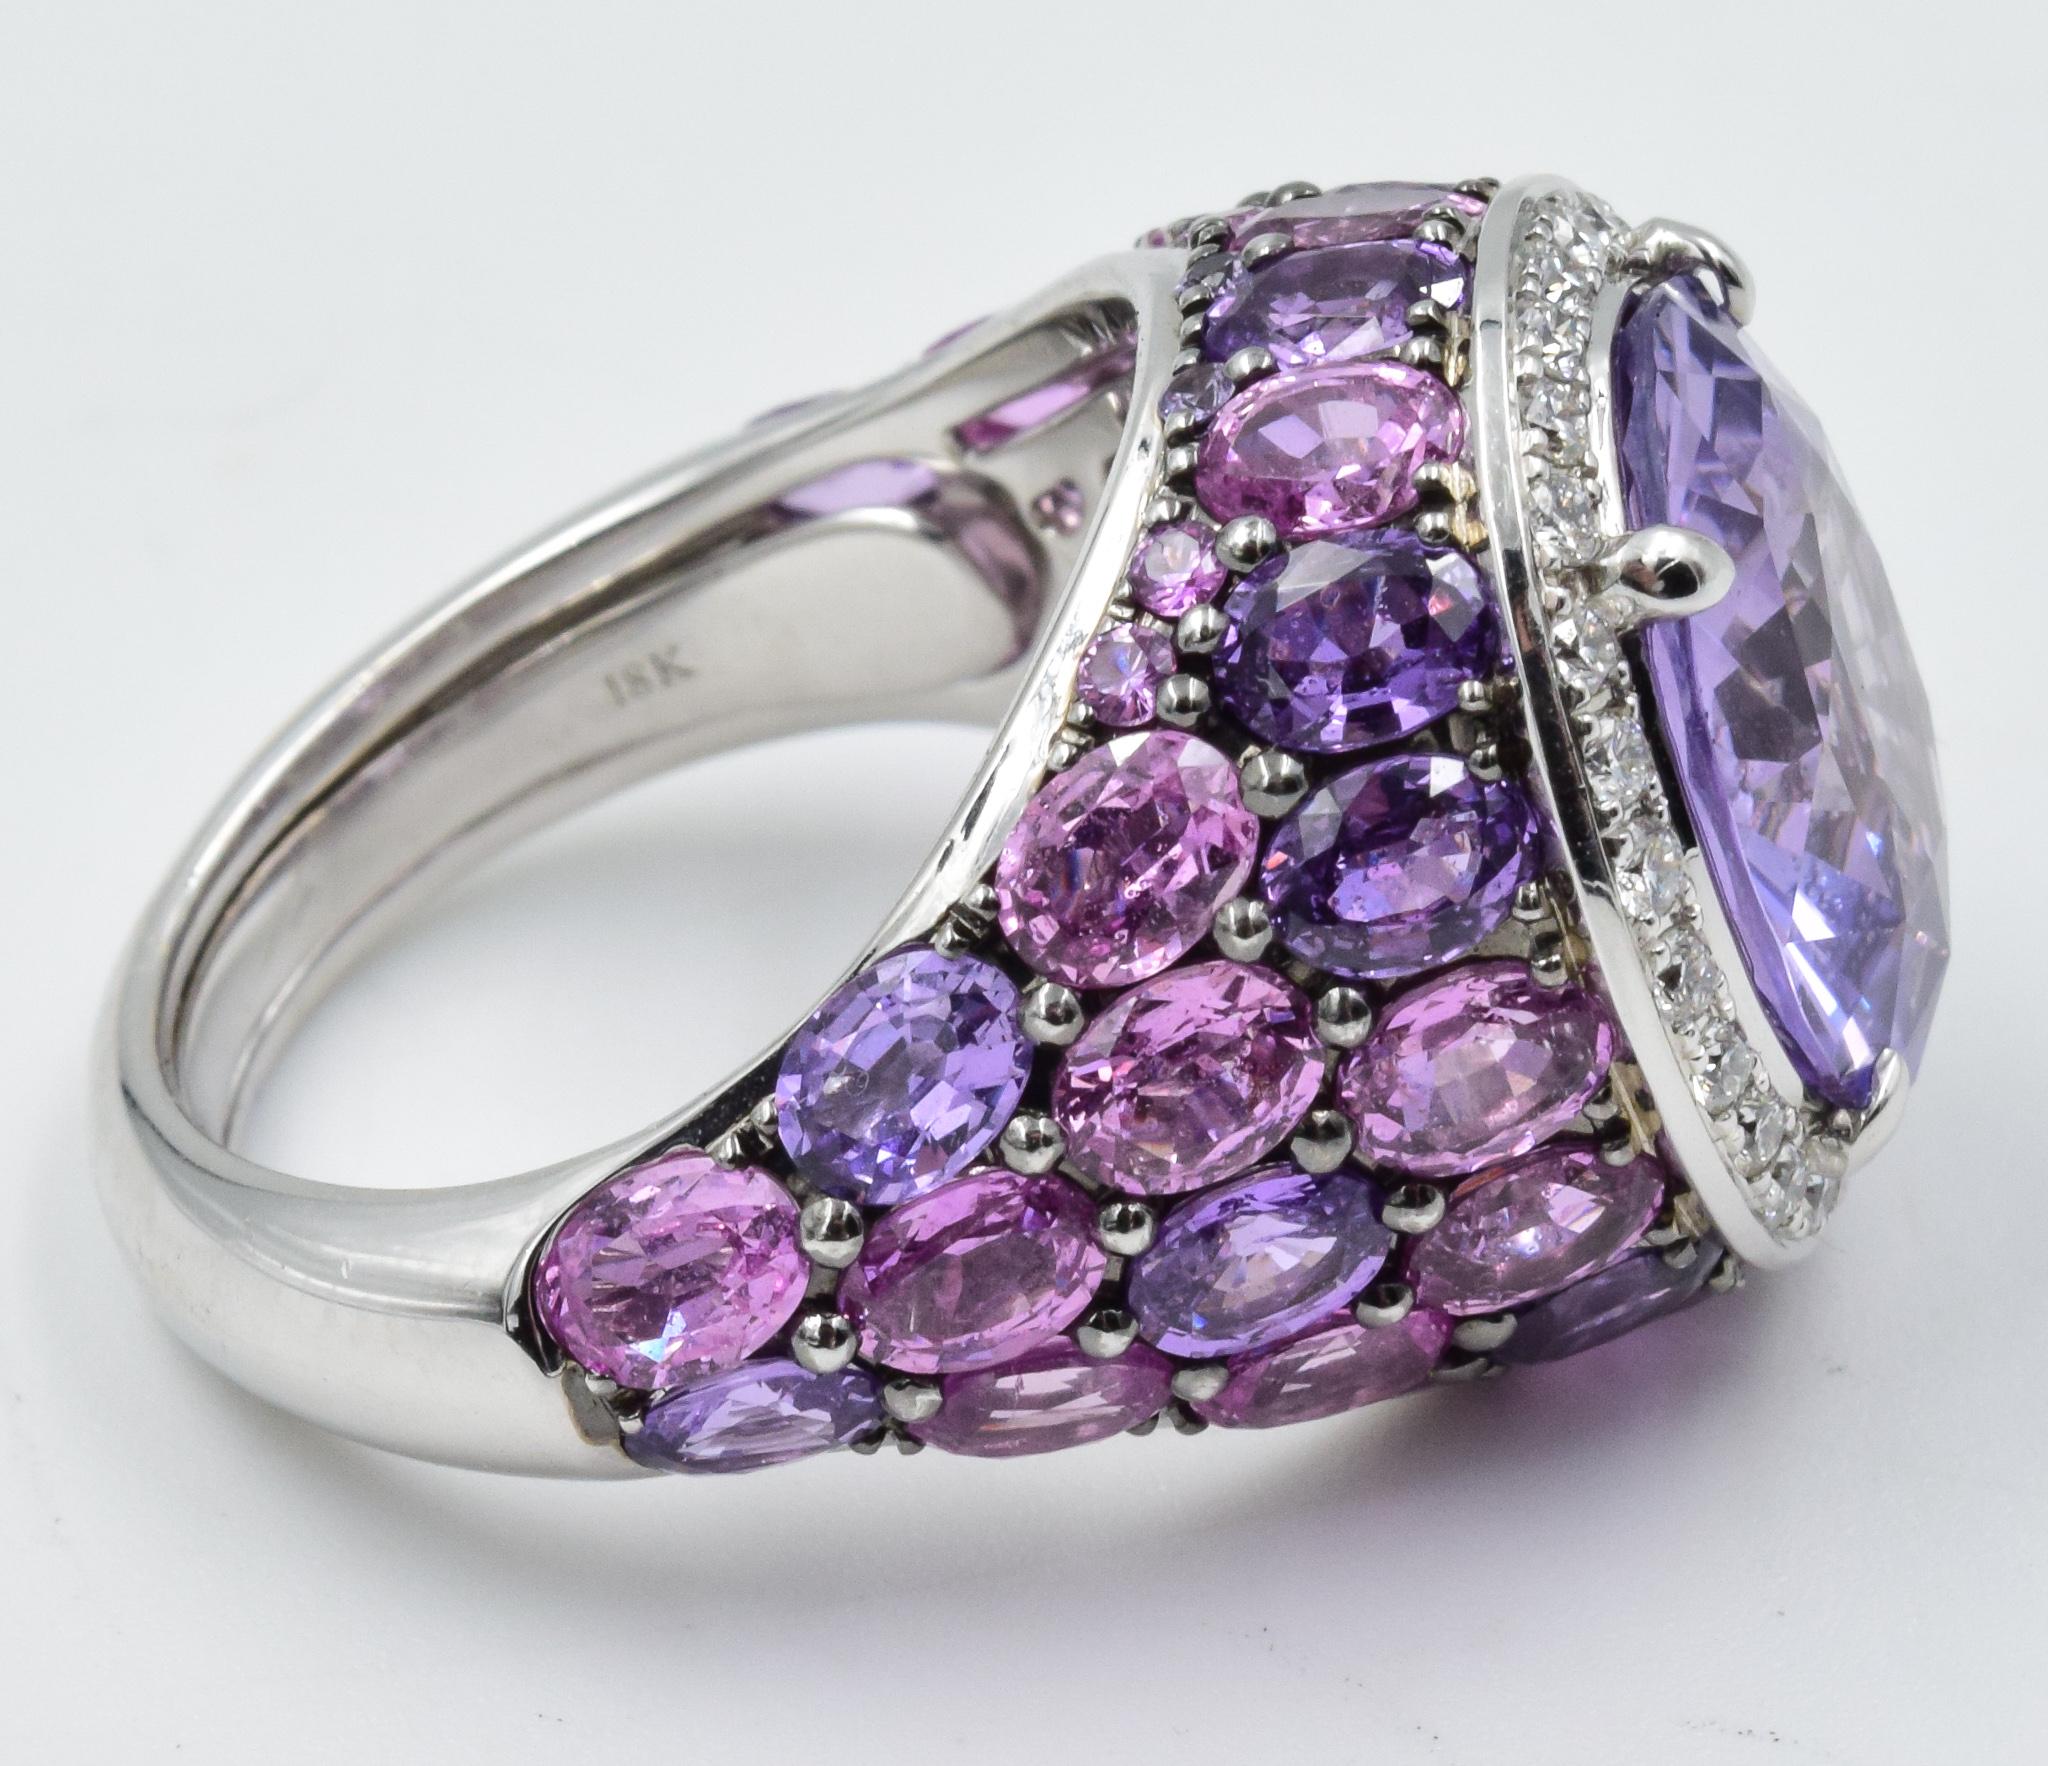 Oval Cut Robert Procop American Glamour Purple and Pink Sapphire Ring in 18 Karat